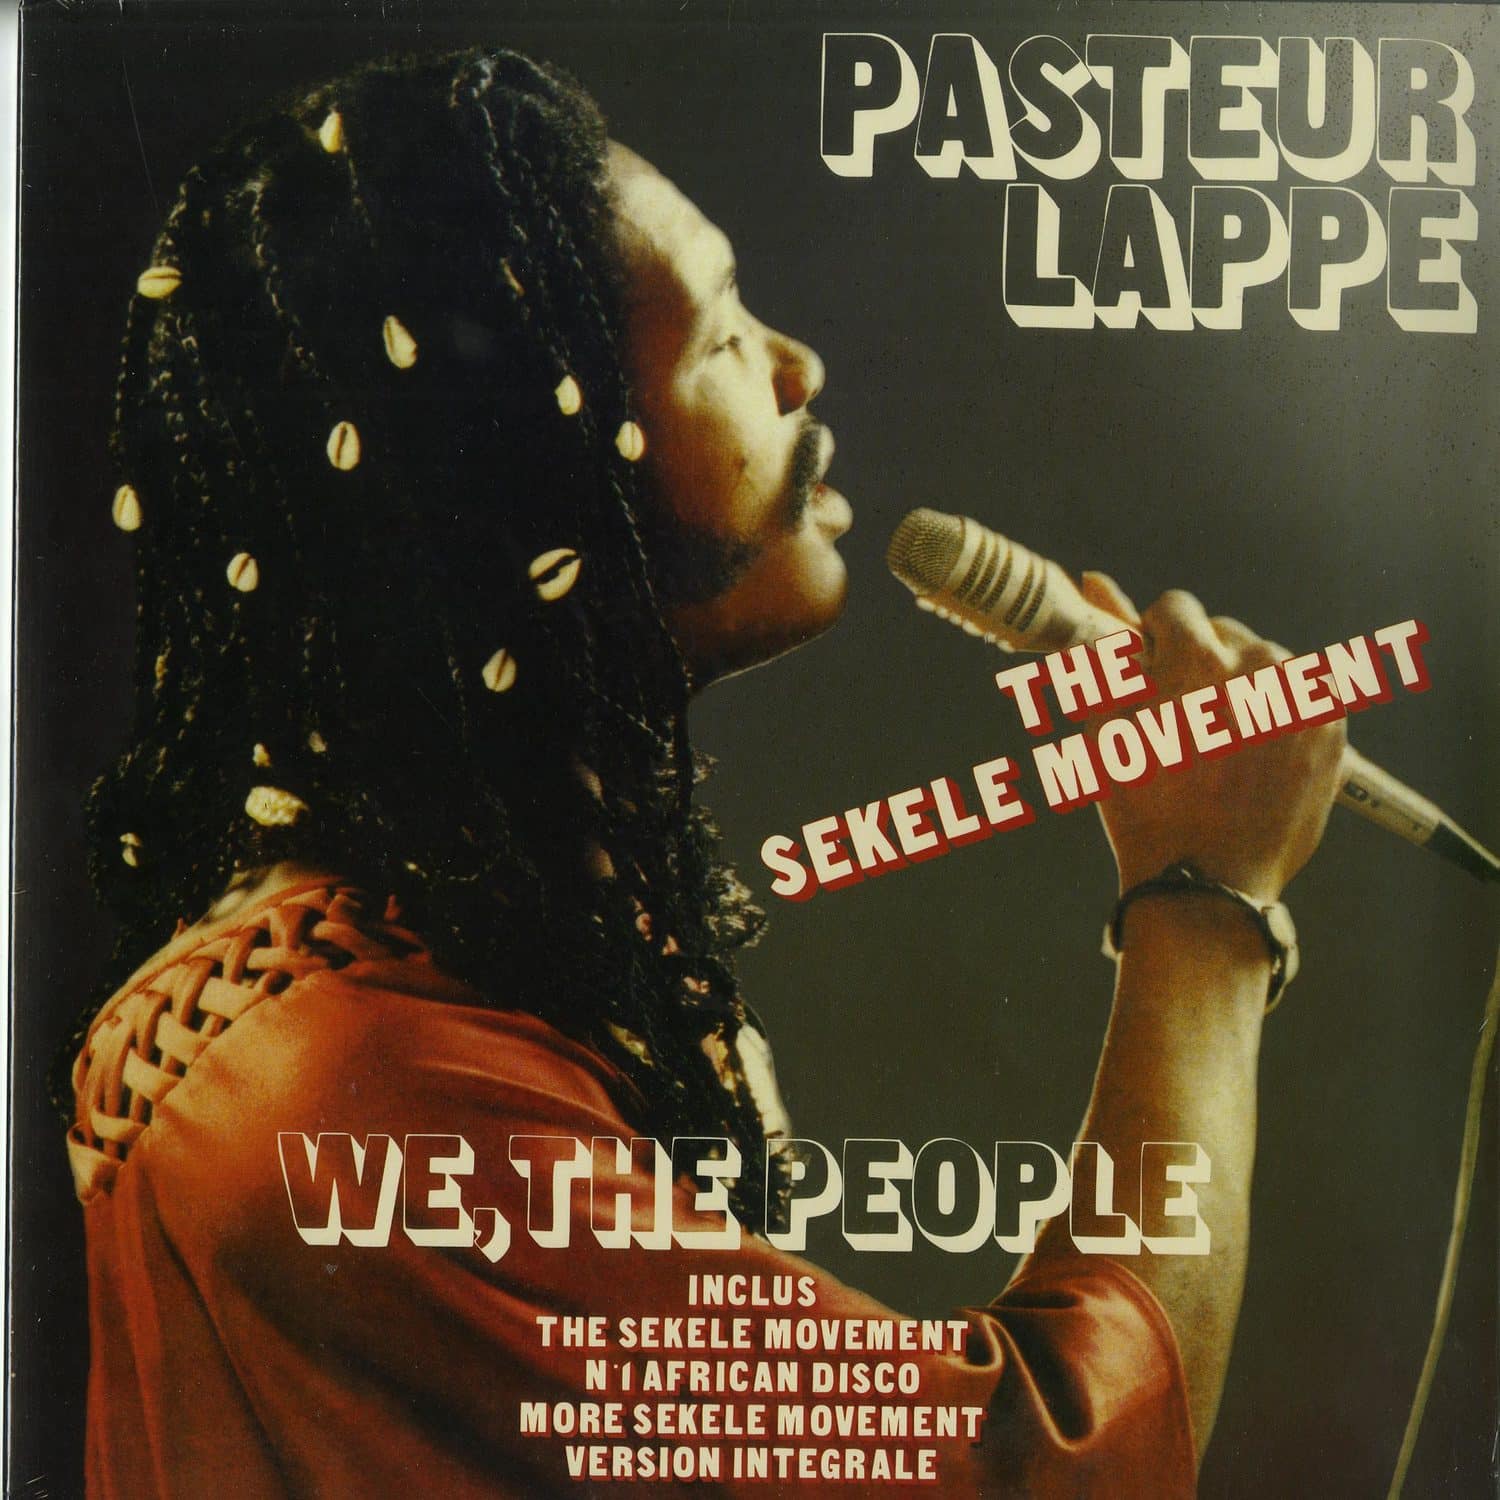 Pasteur Lappe - WE, THE PEOPLE 